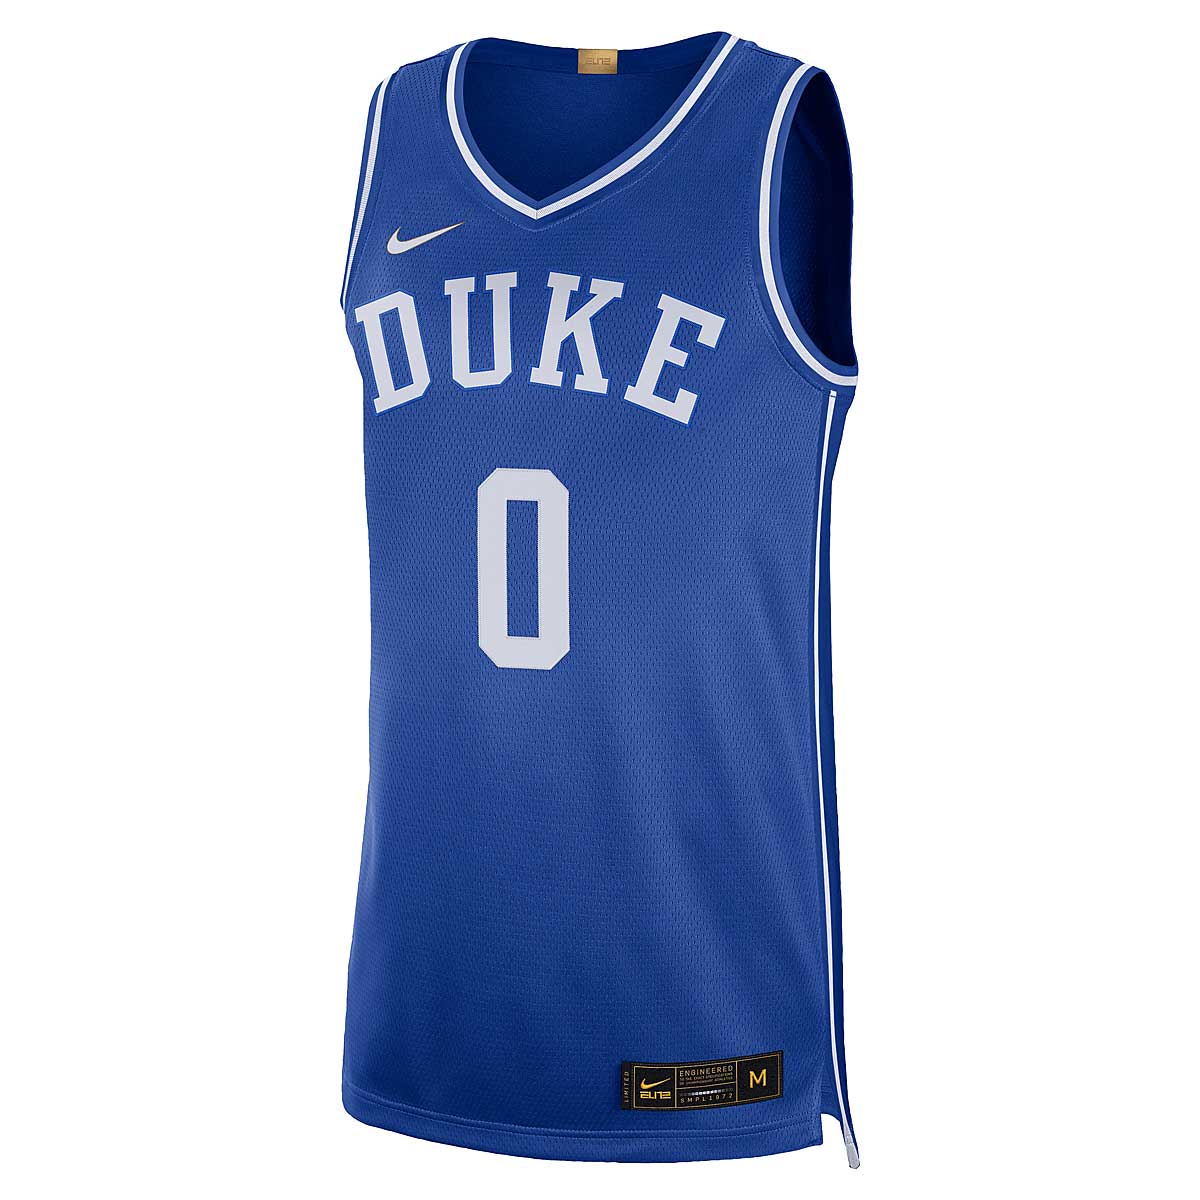 Nike Ncaa Duke Blau Devils Dri-fit Limited Edition Jersey Jayson Tatum, Game Royal S